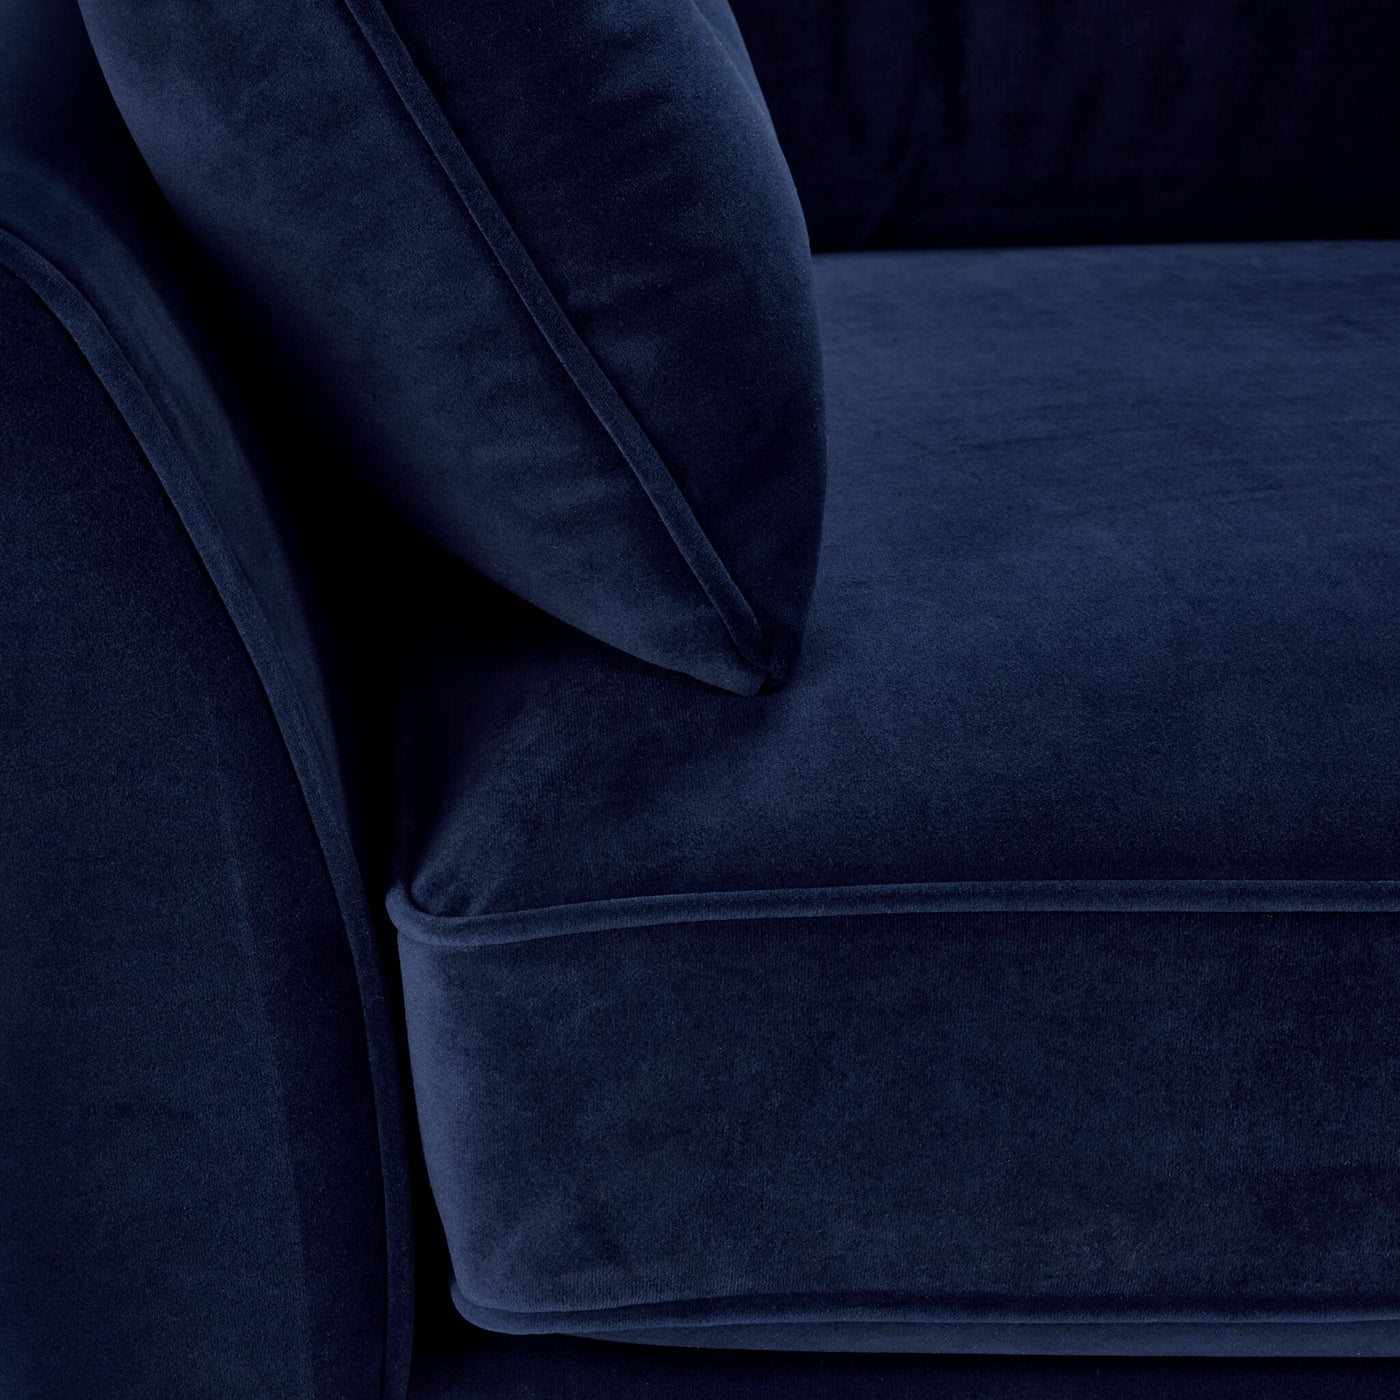 Mallory Chair - Blue